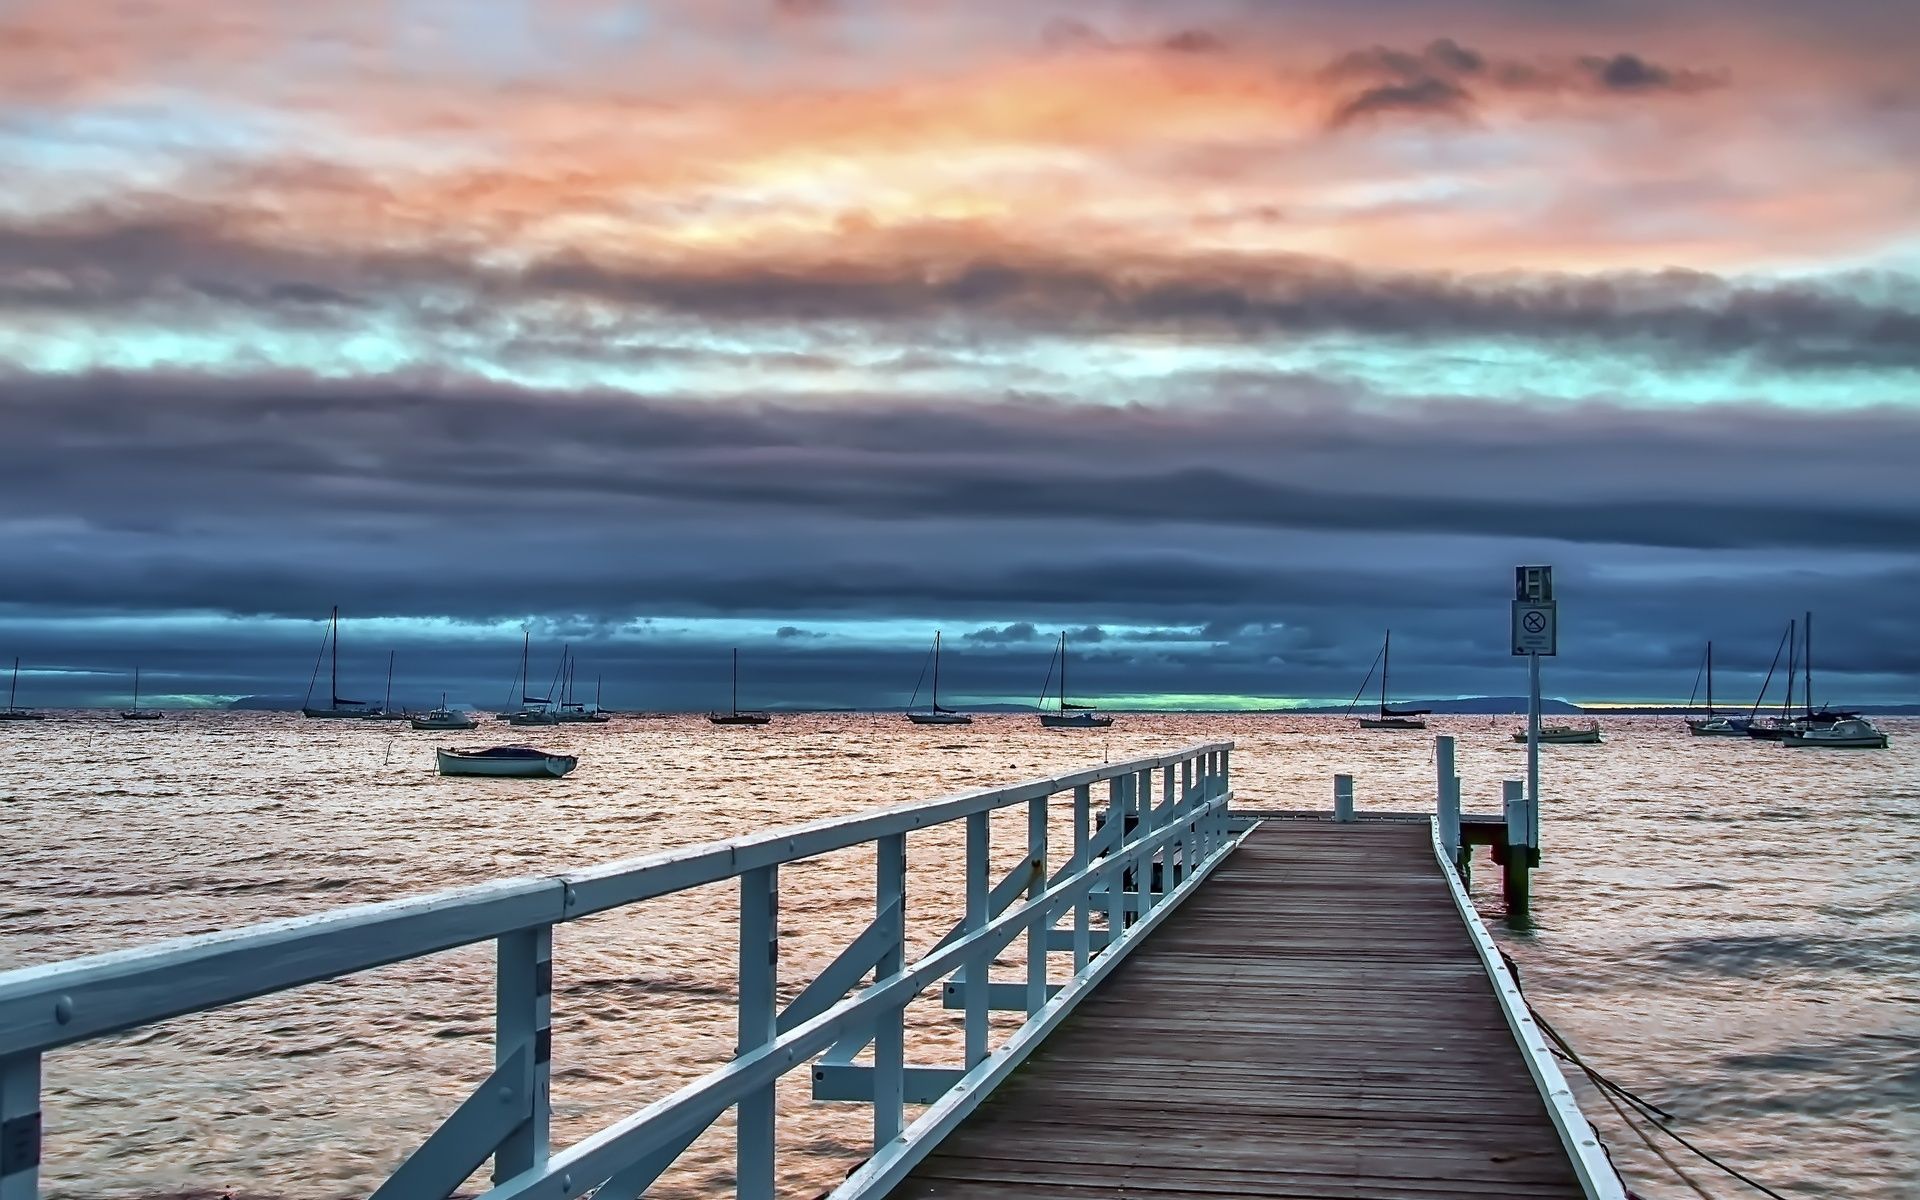 تصویر زمینه اسکله روی خشکی نزدیک دریا مناسب ویندوز 12